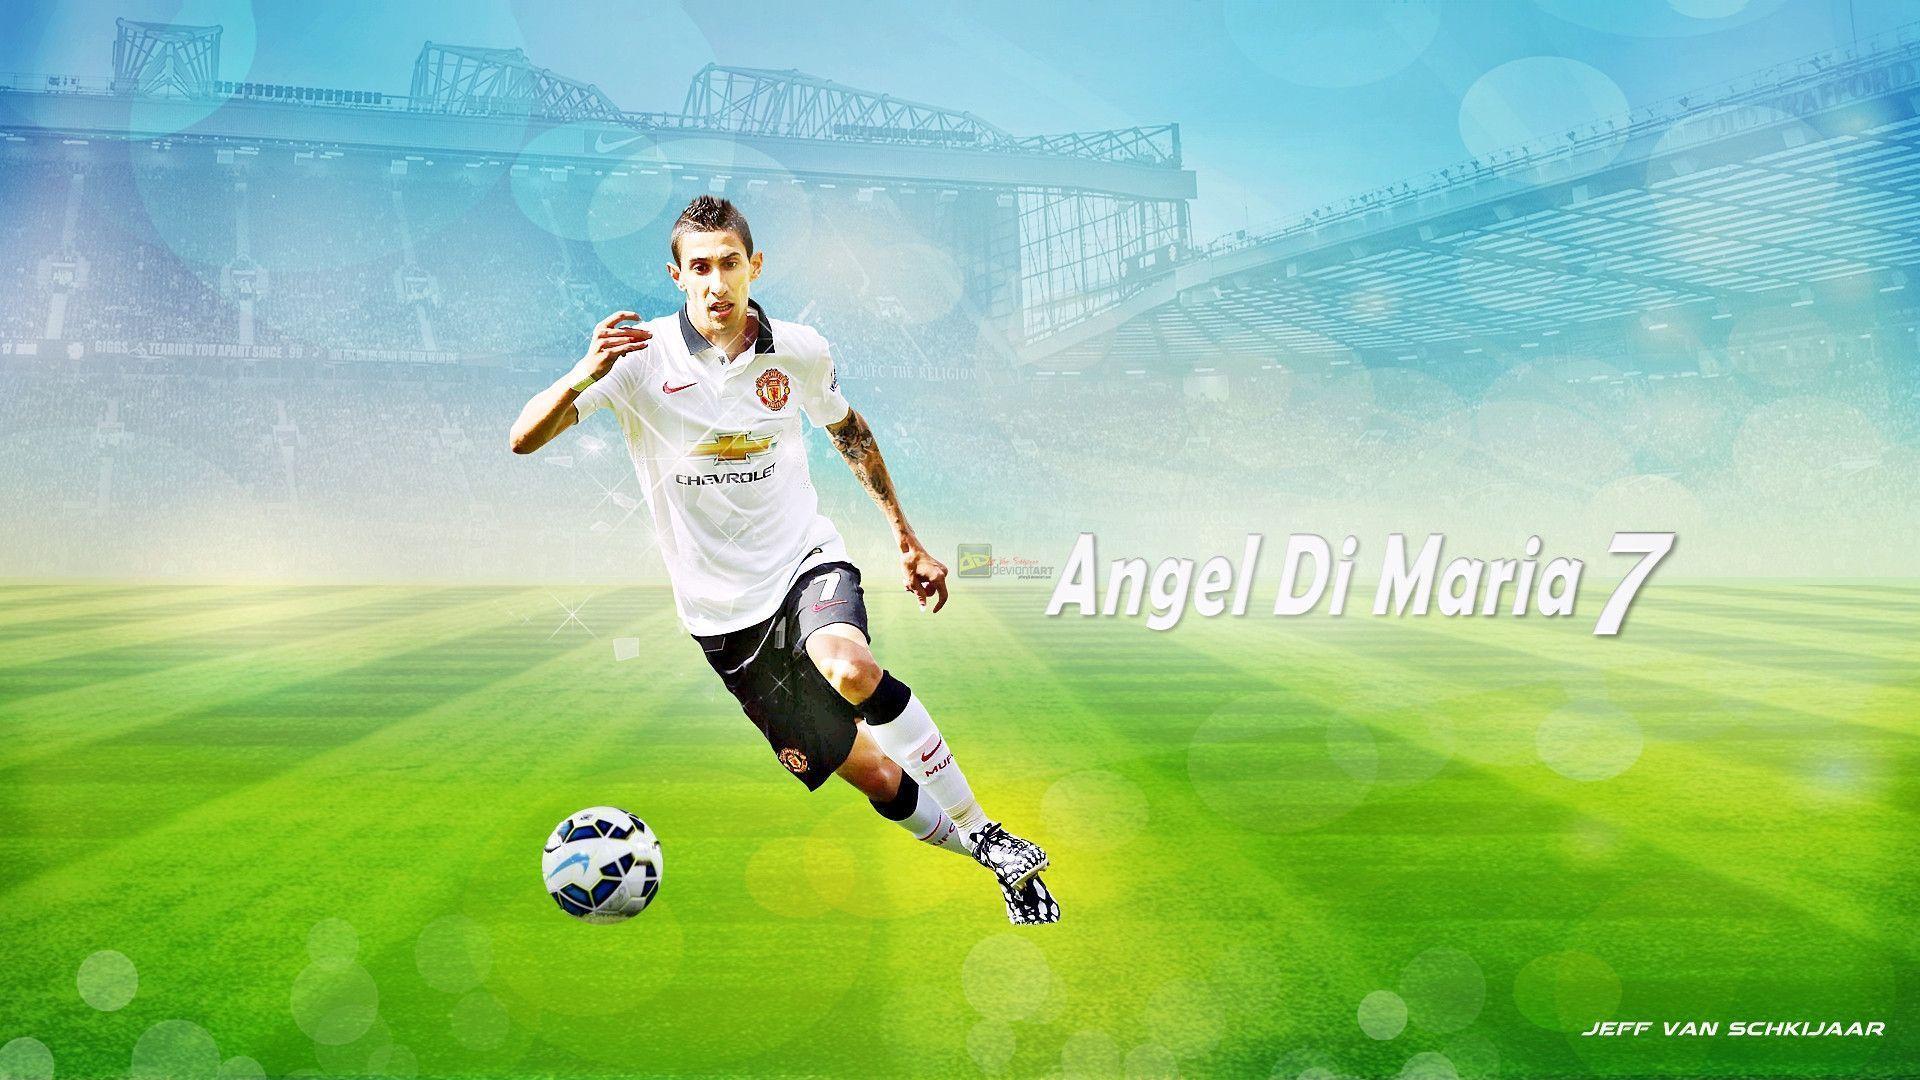 Angel Di Maria 2014 Manchester United Wallpaper Wide or HD. Male